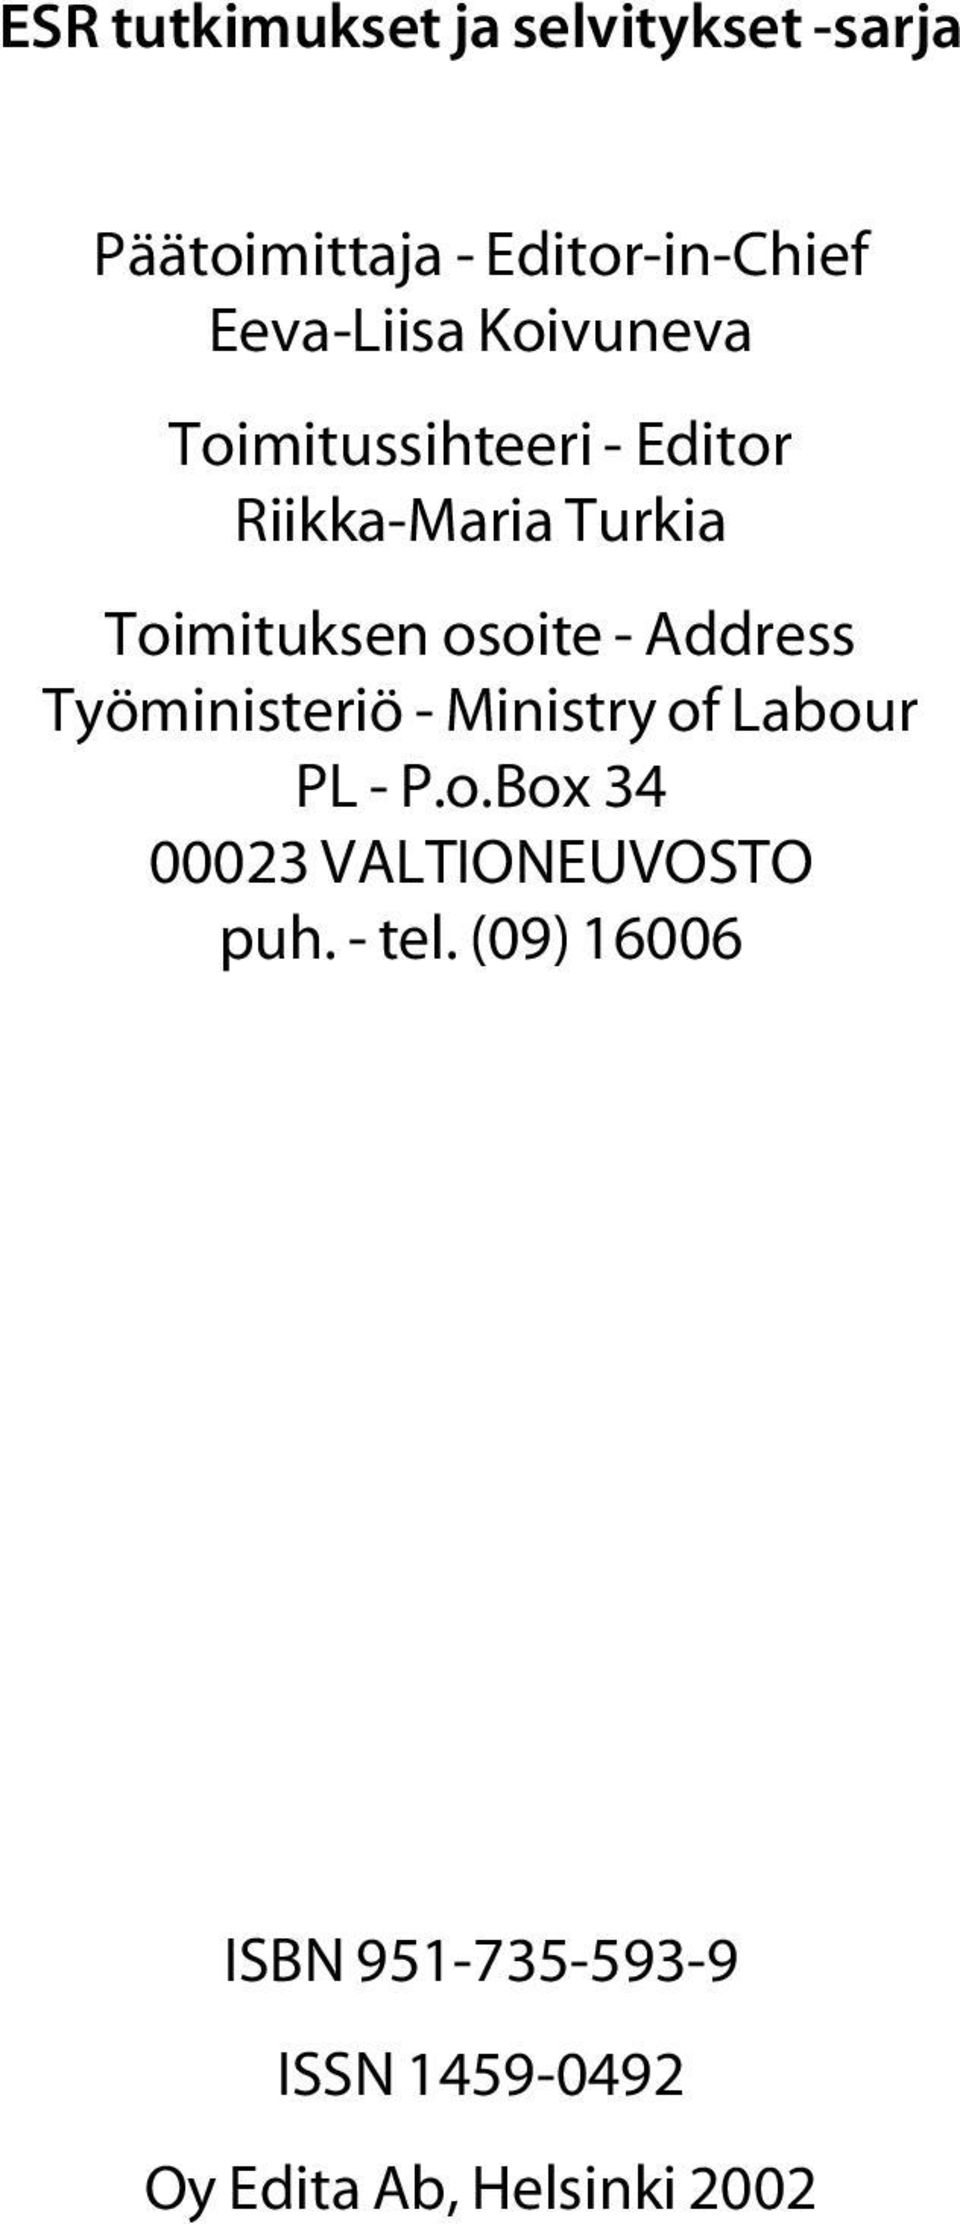 Address Työministeriö - Ministry of Labour PL - P.o.Box 34 00023 VALTIONEUVOSTO puh.